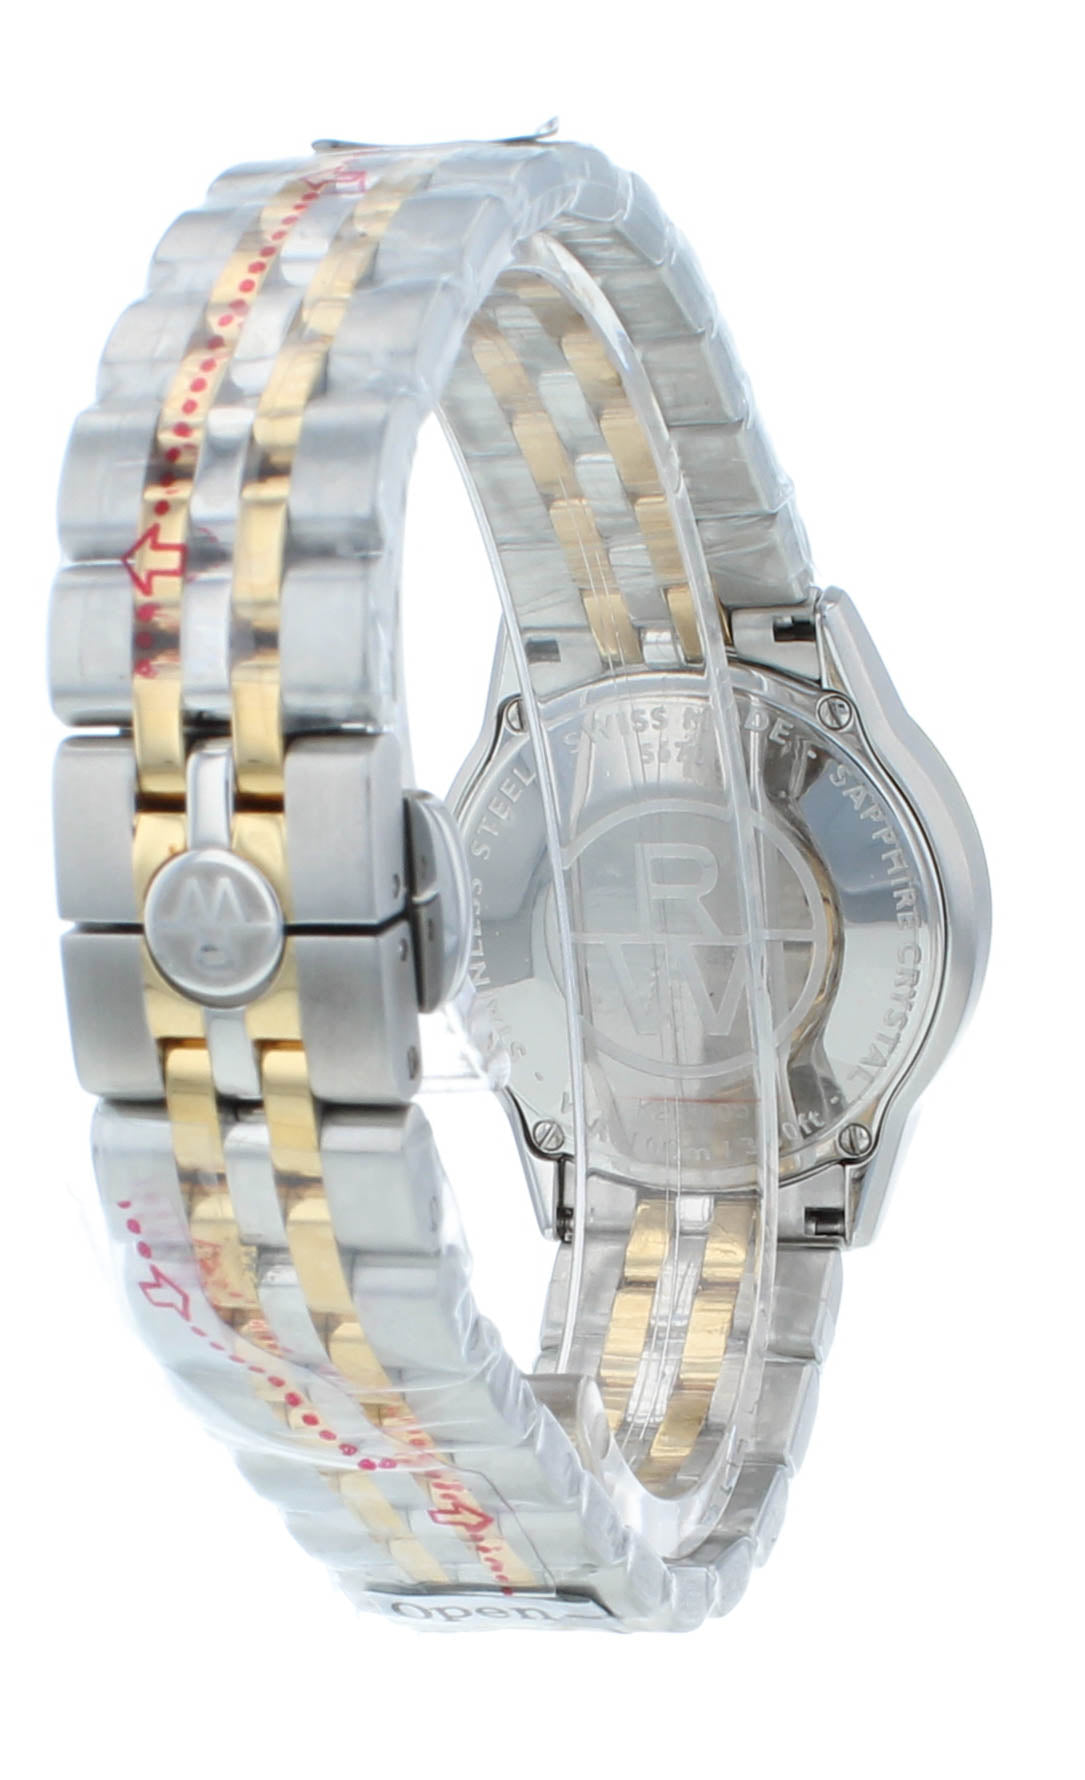 Raymond Weil Freelancer 29mm Quartz Diamond Two-Tone Ladies Watch 5670-STP-97091